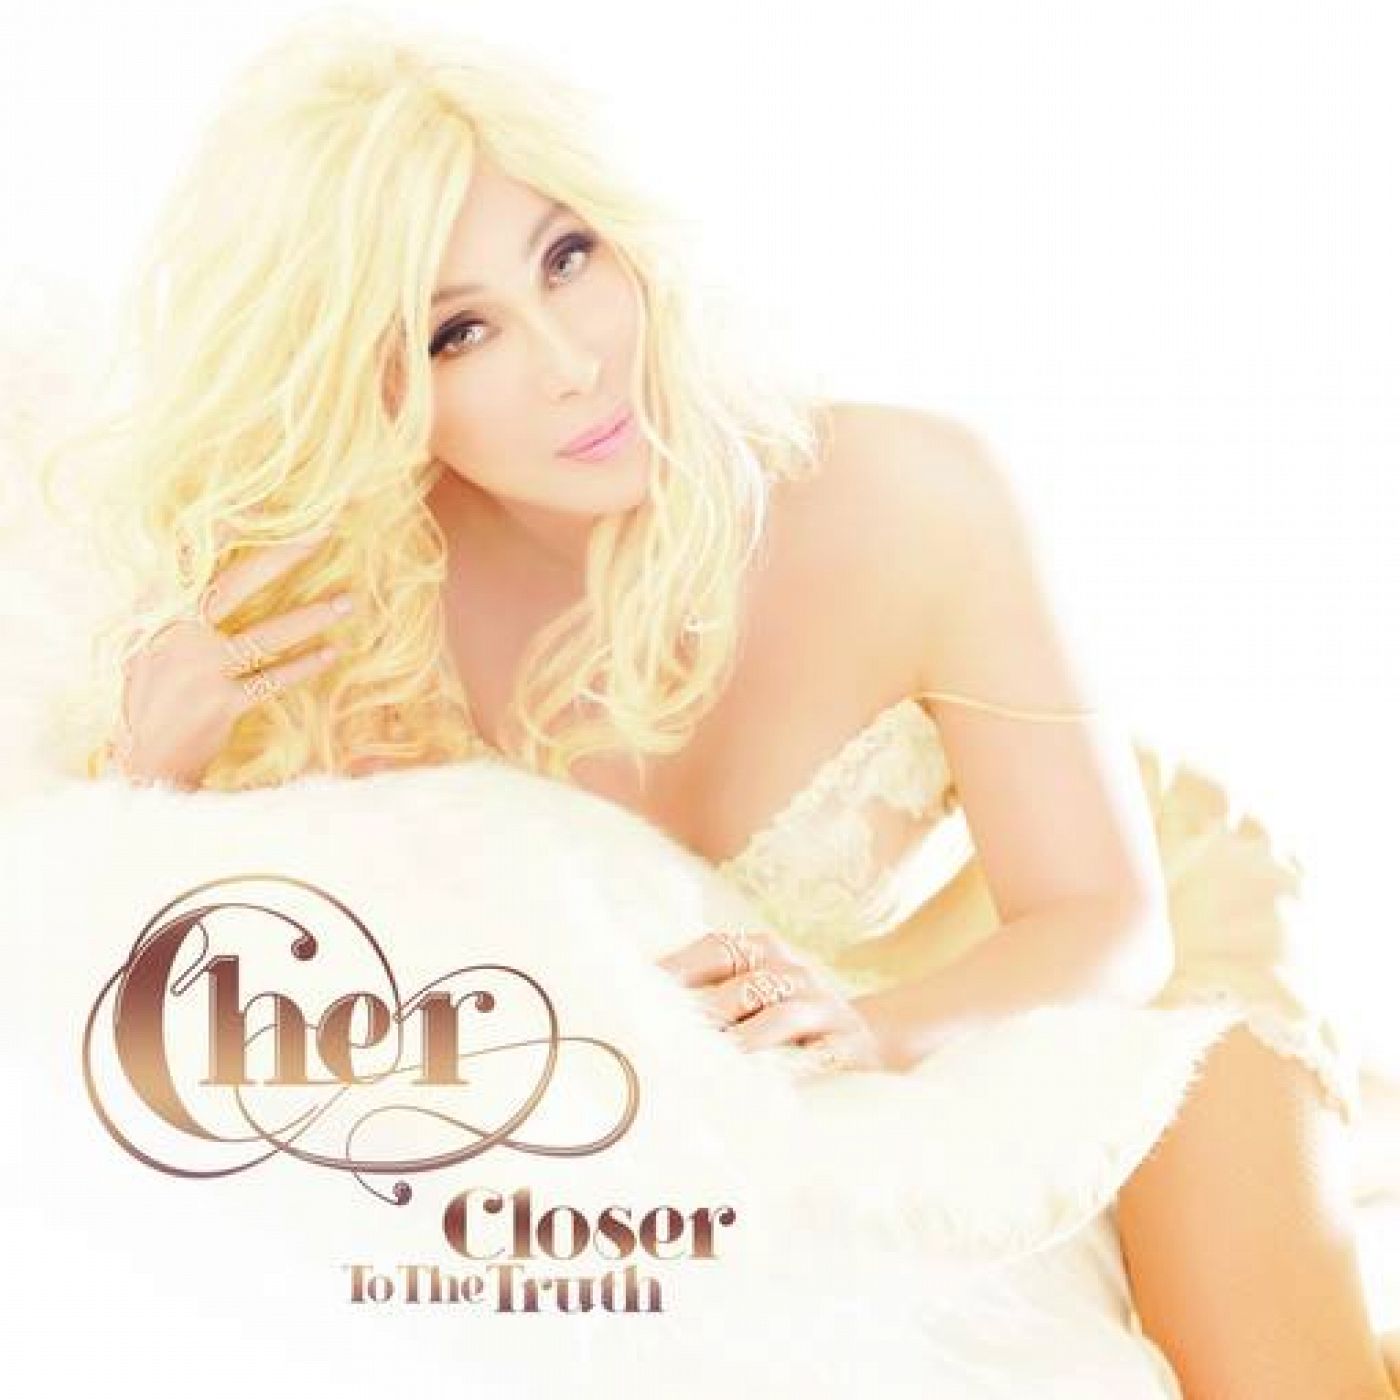 La portada de 'Closer To The Truth', nuevo disco de Cher